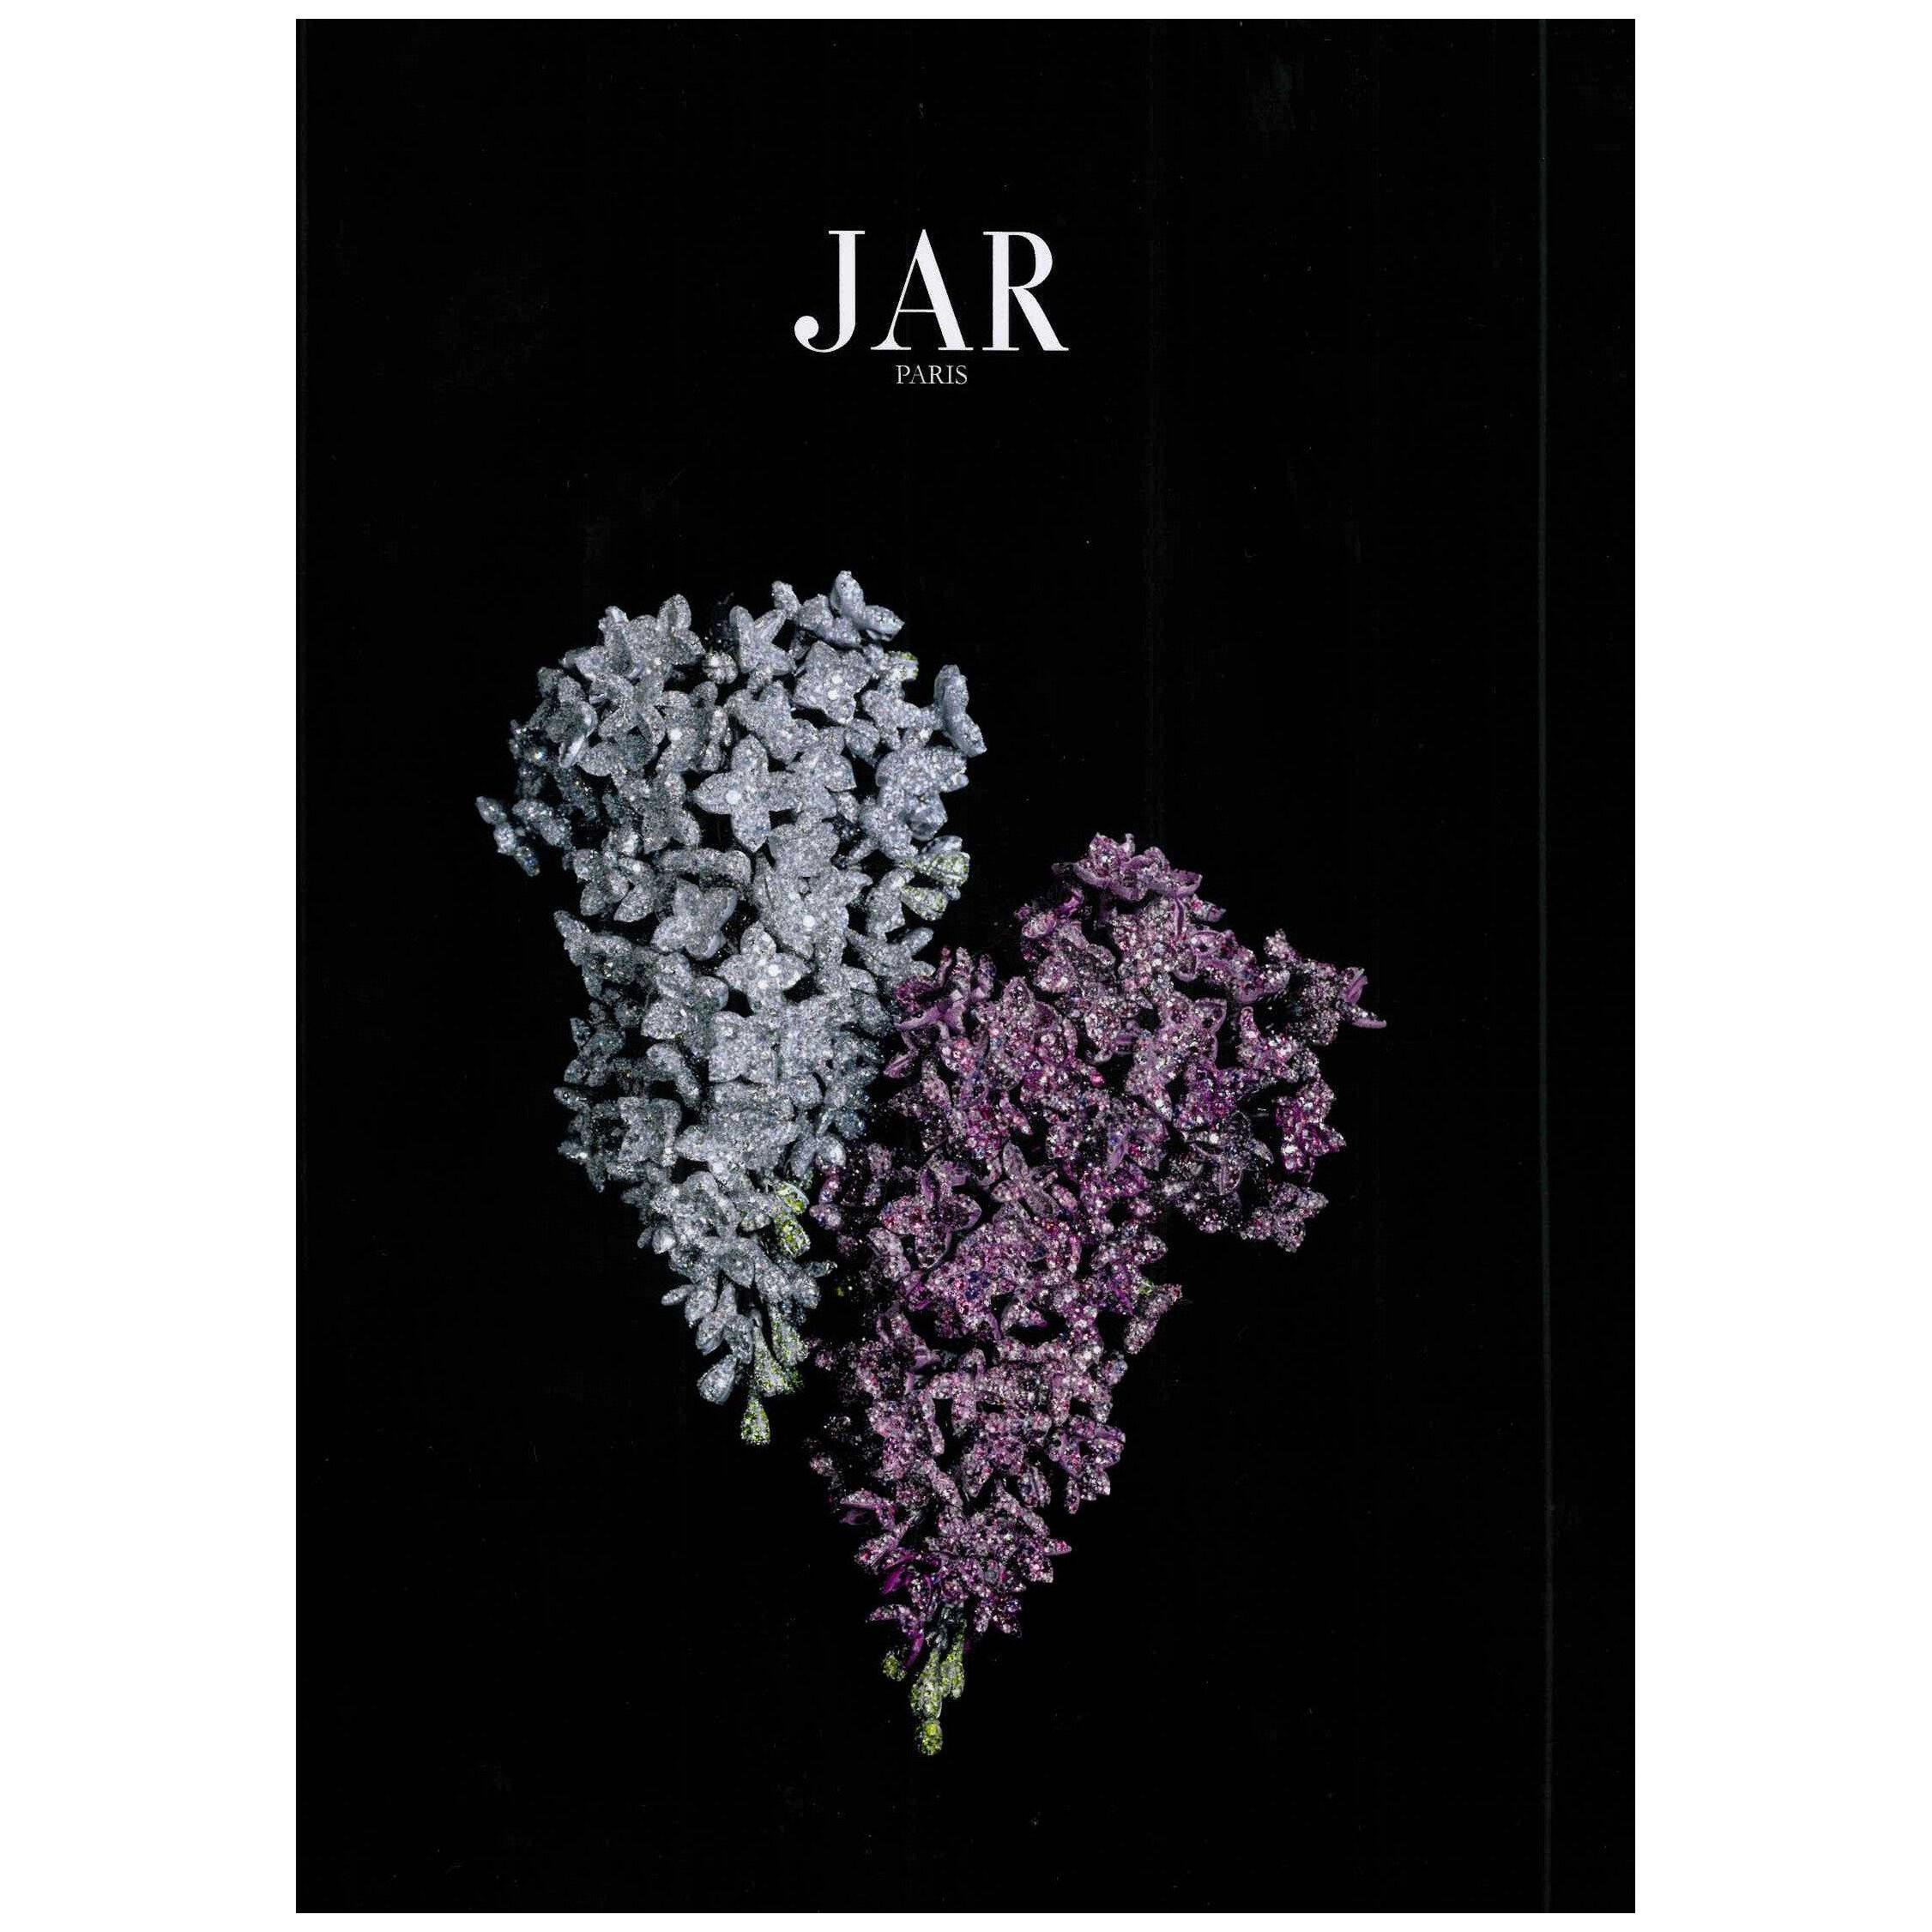 JAR PARIS Volume 1. Book